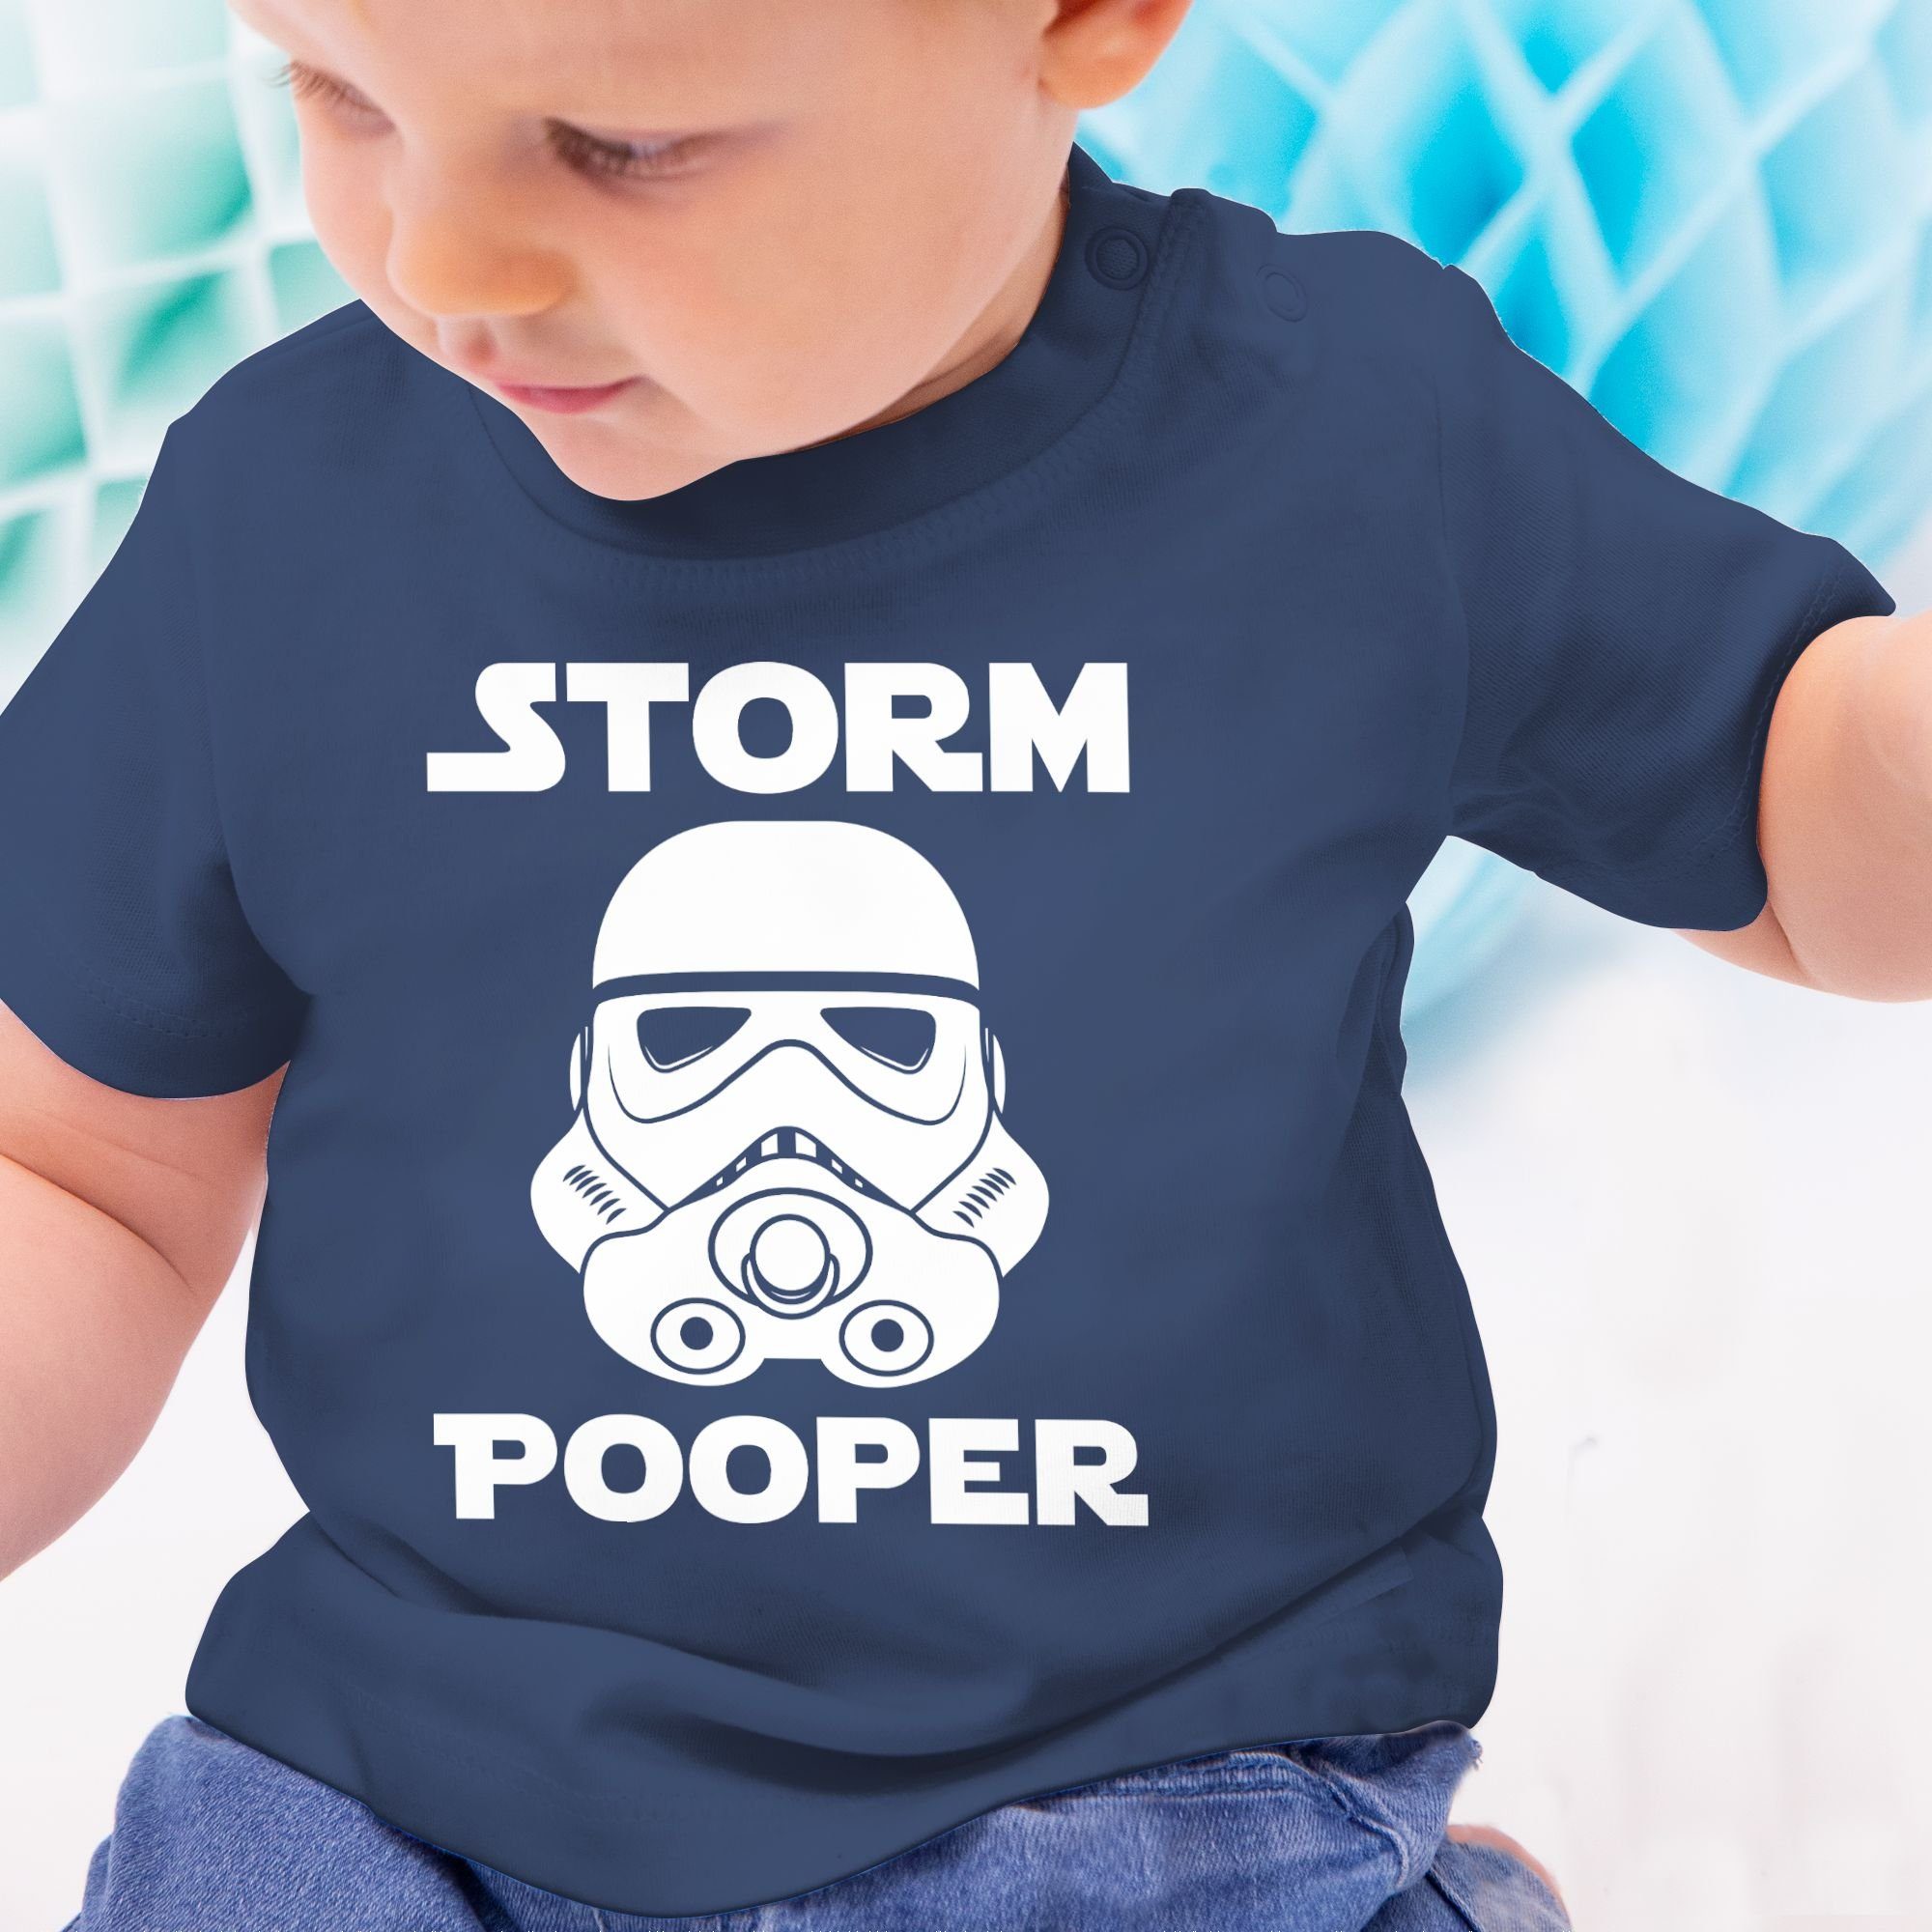 Shirtracer T-Shirt Storm Stormpooper Sprüche Baby Pooper 1 - Navy Blau